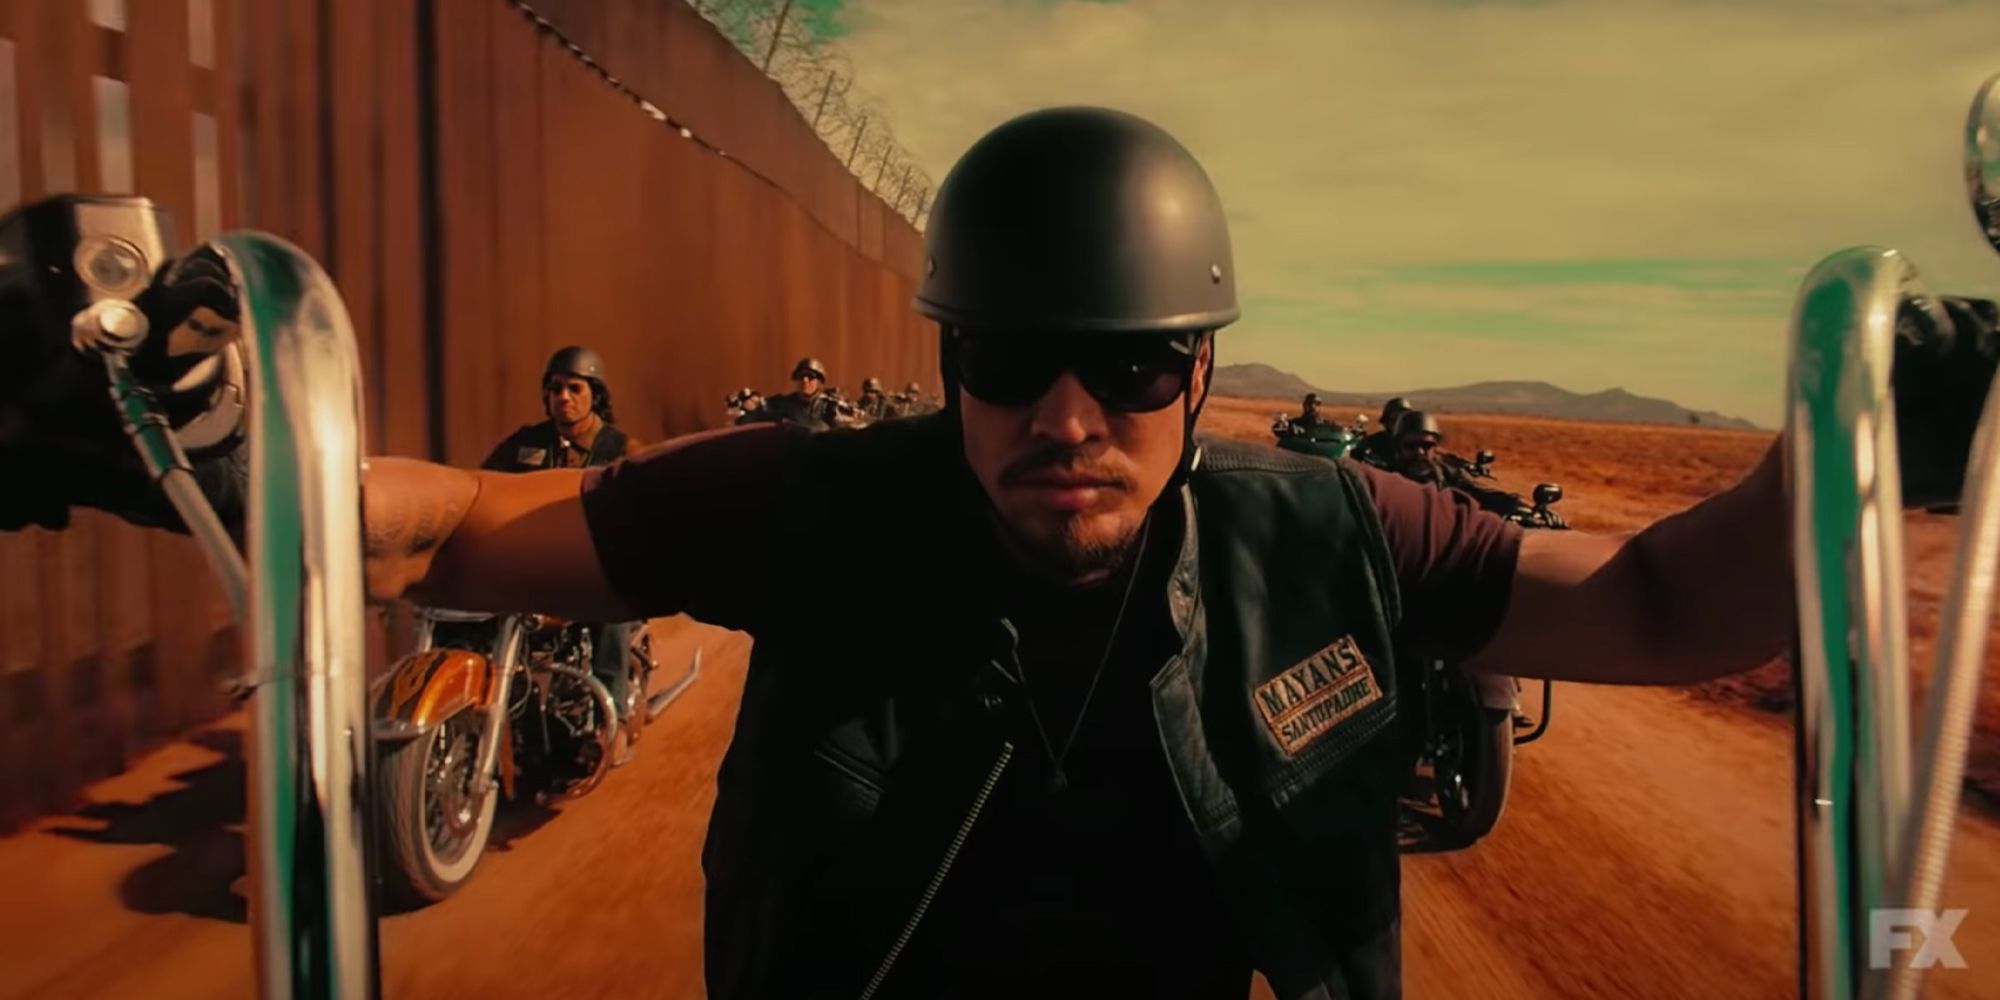 A Mayans MC members rides a bike in the Season 3 Trailer